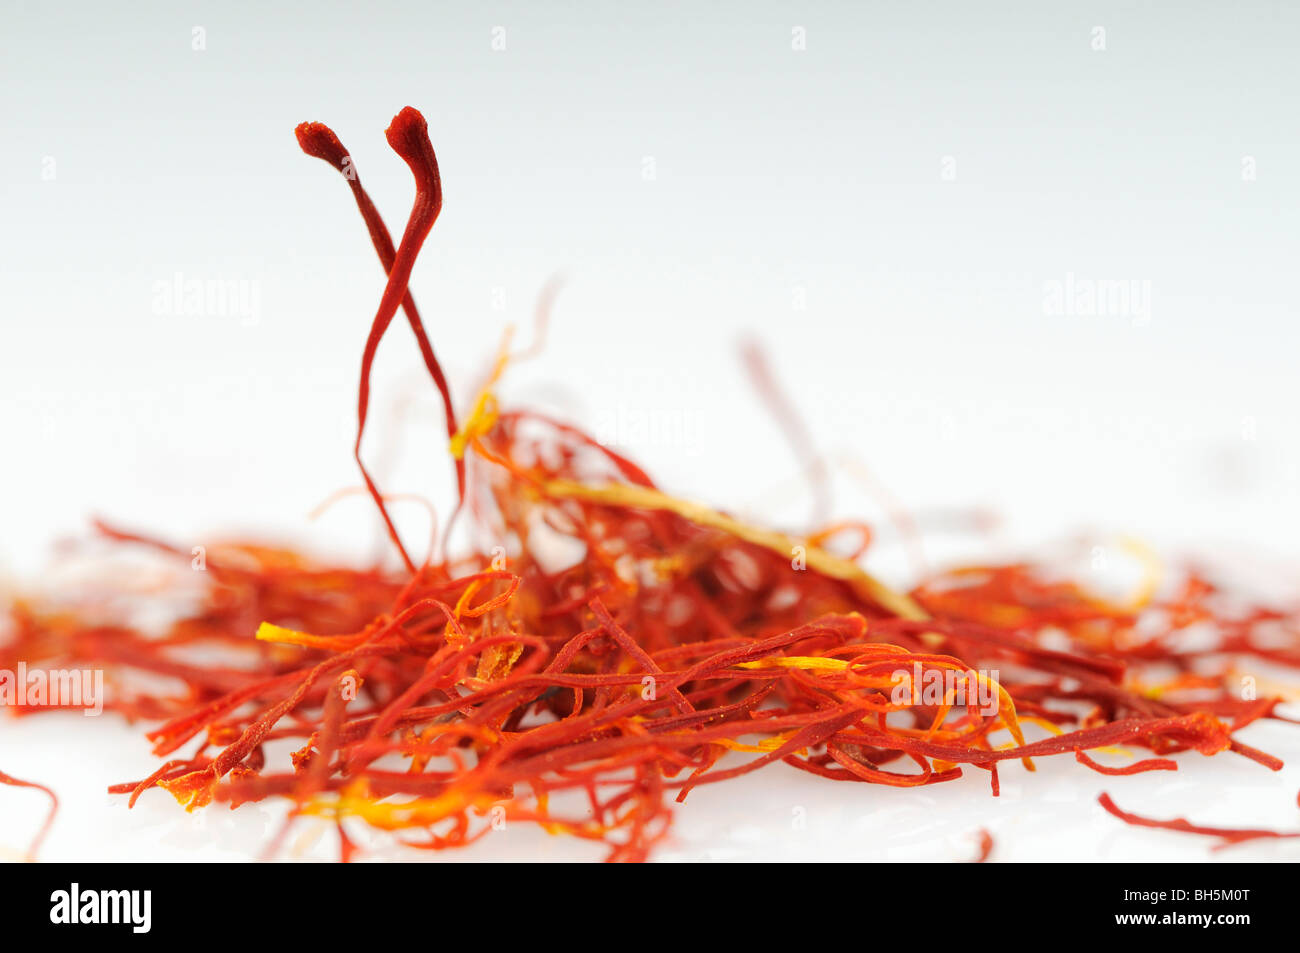 Stock photo of saffron strands on a white background. Stock Photo